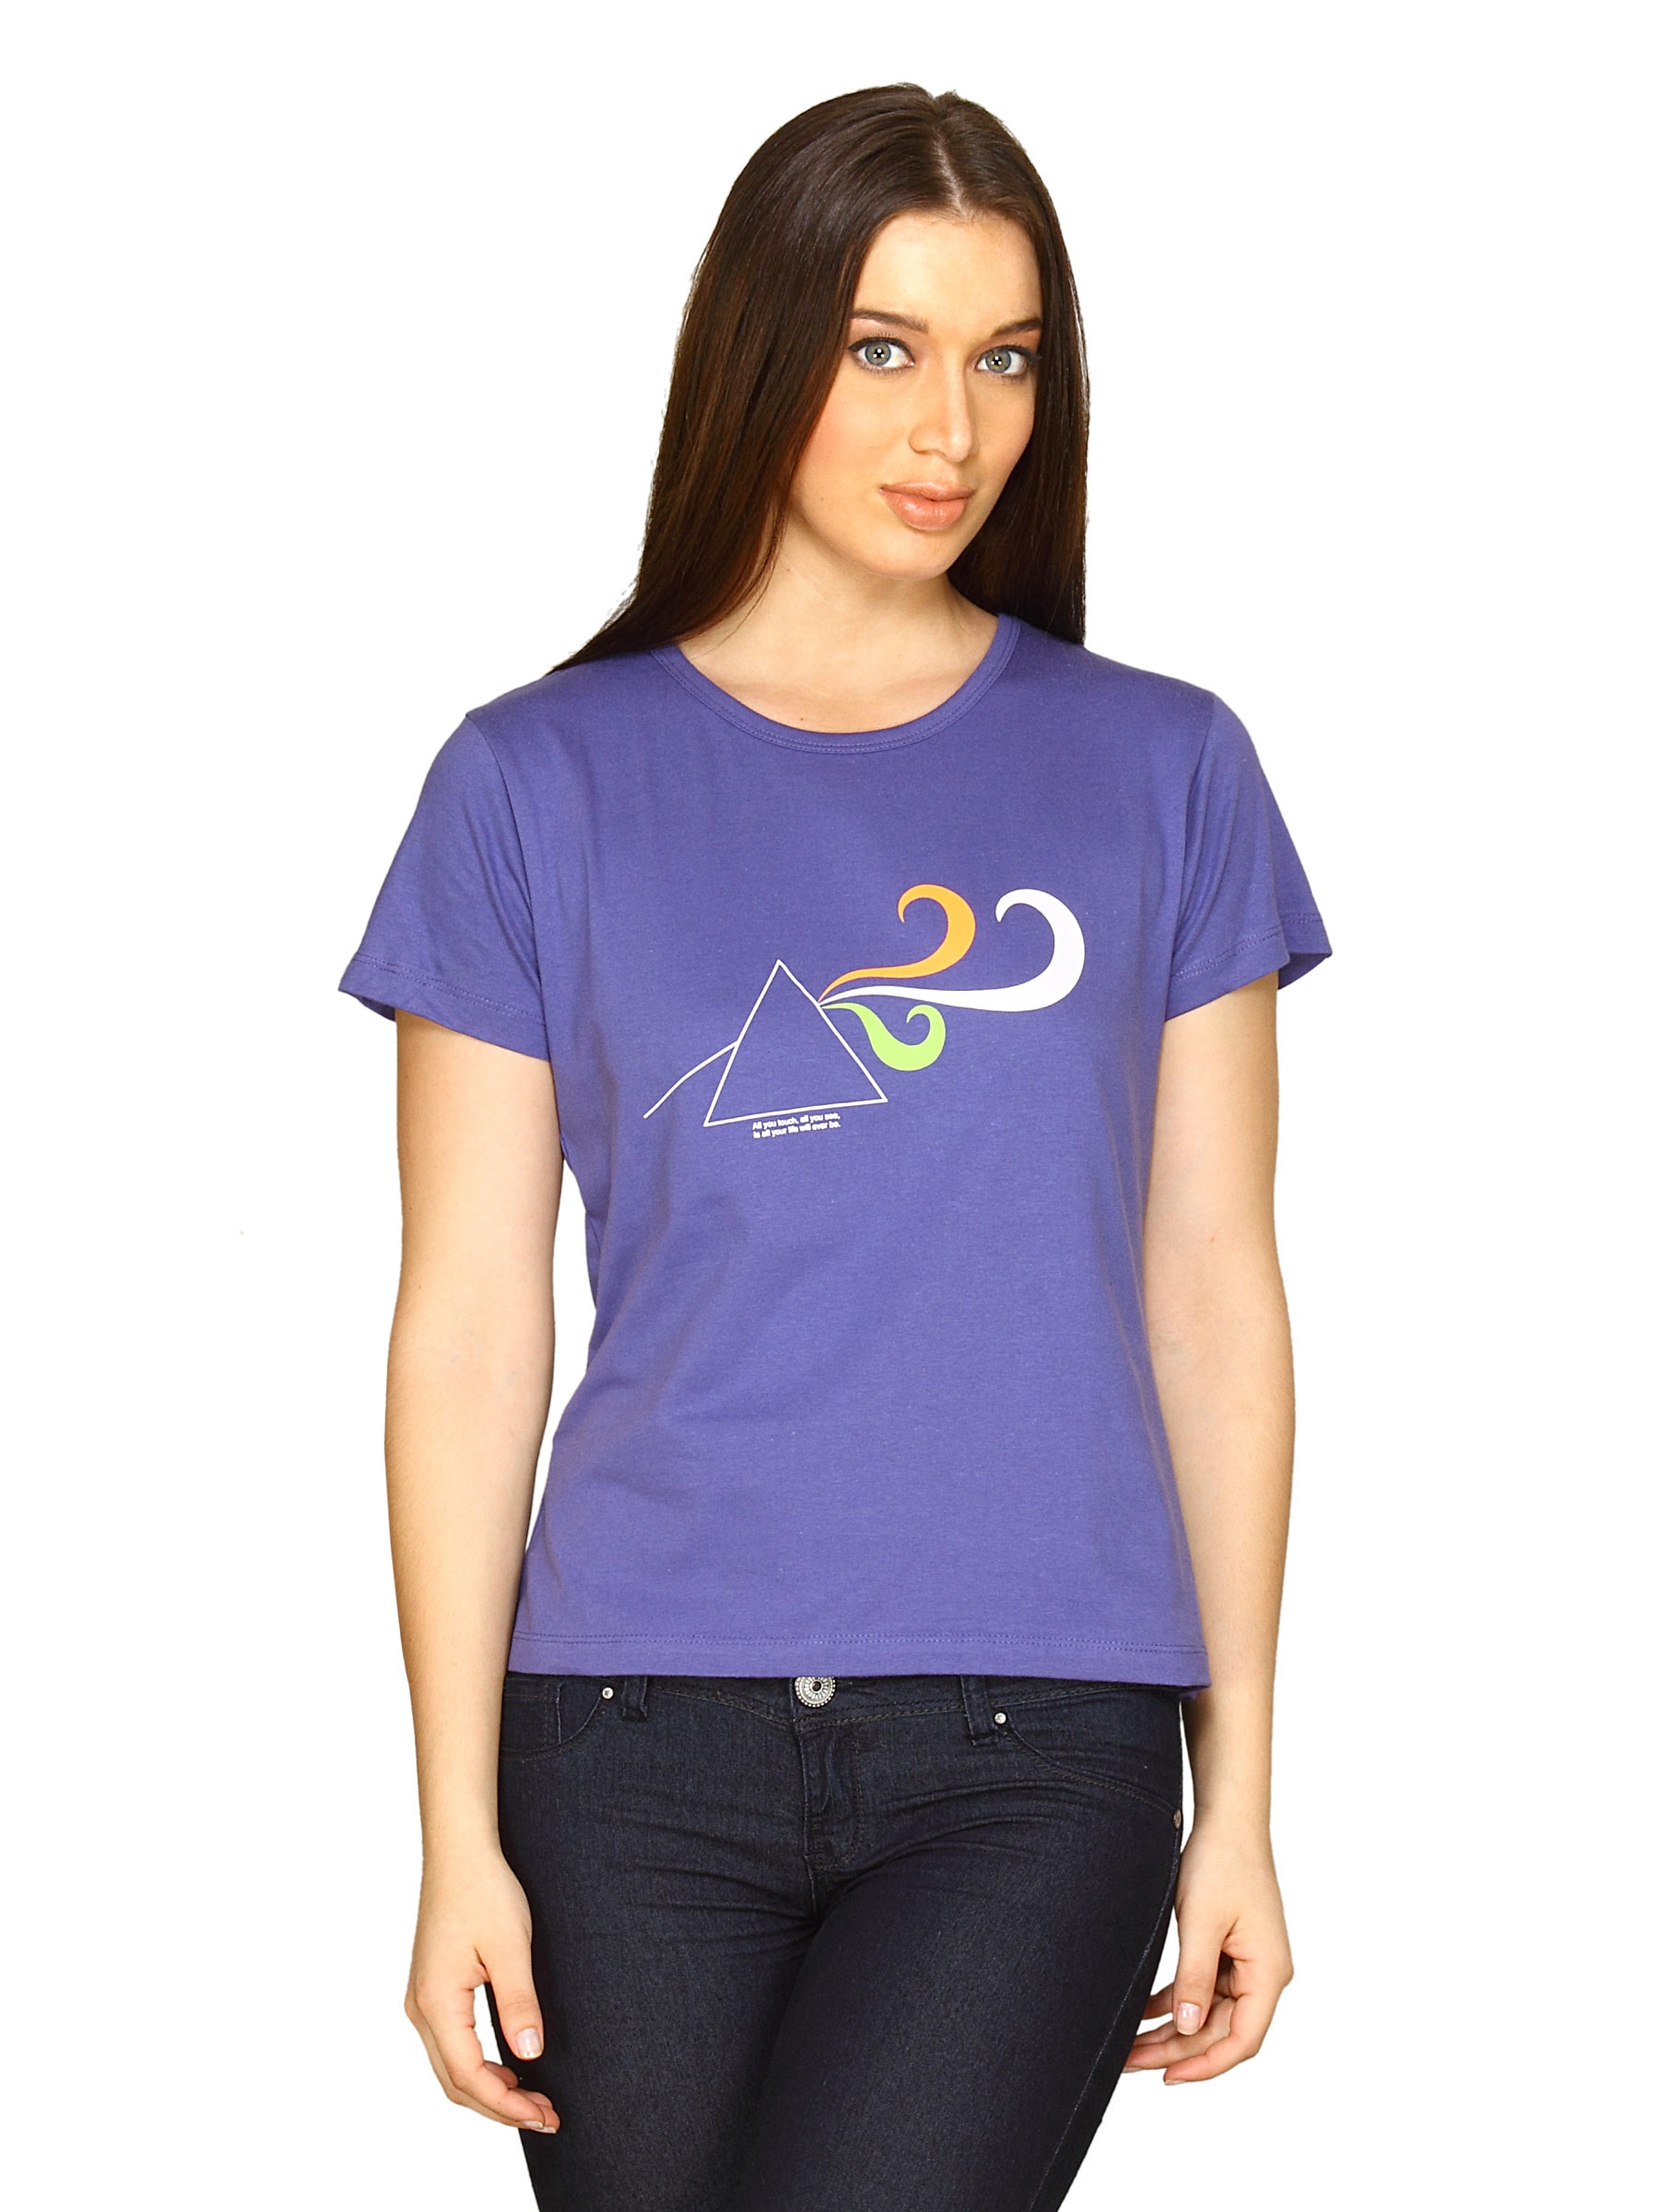 Tantra Women's Prism Blue T-shirt